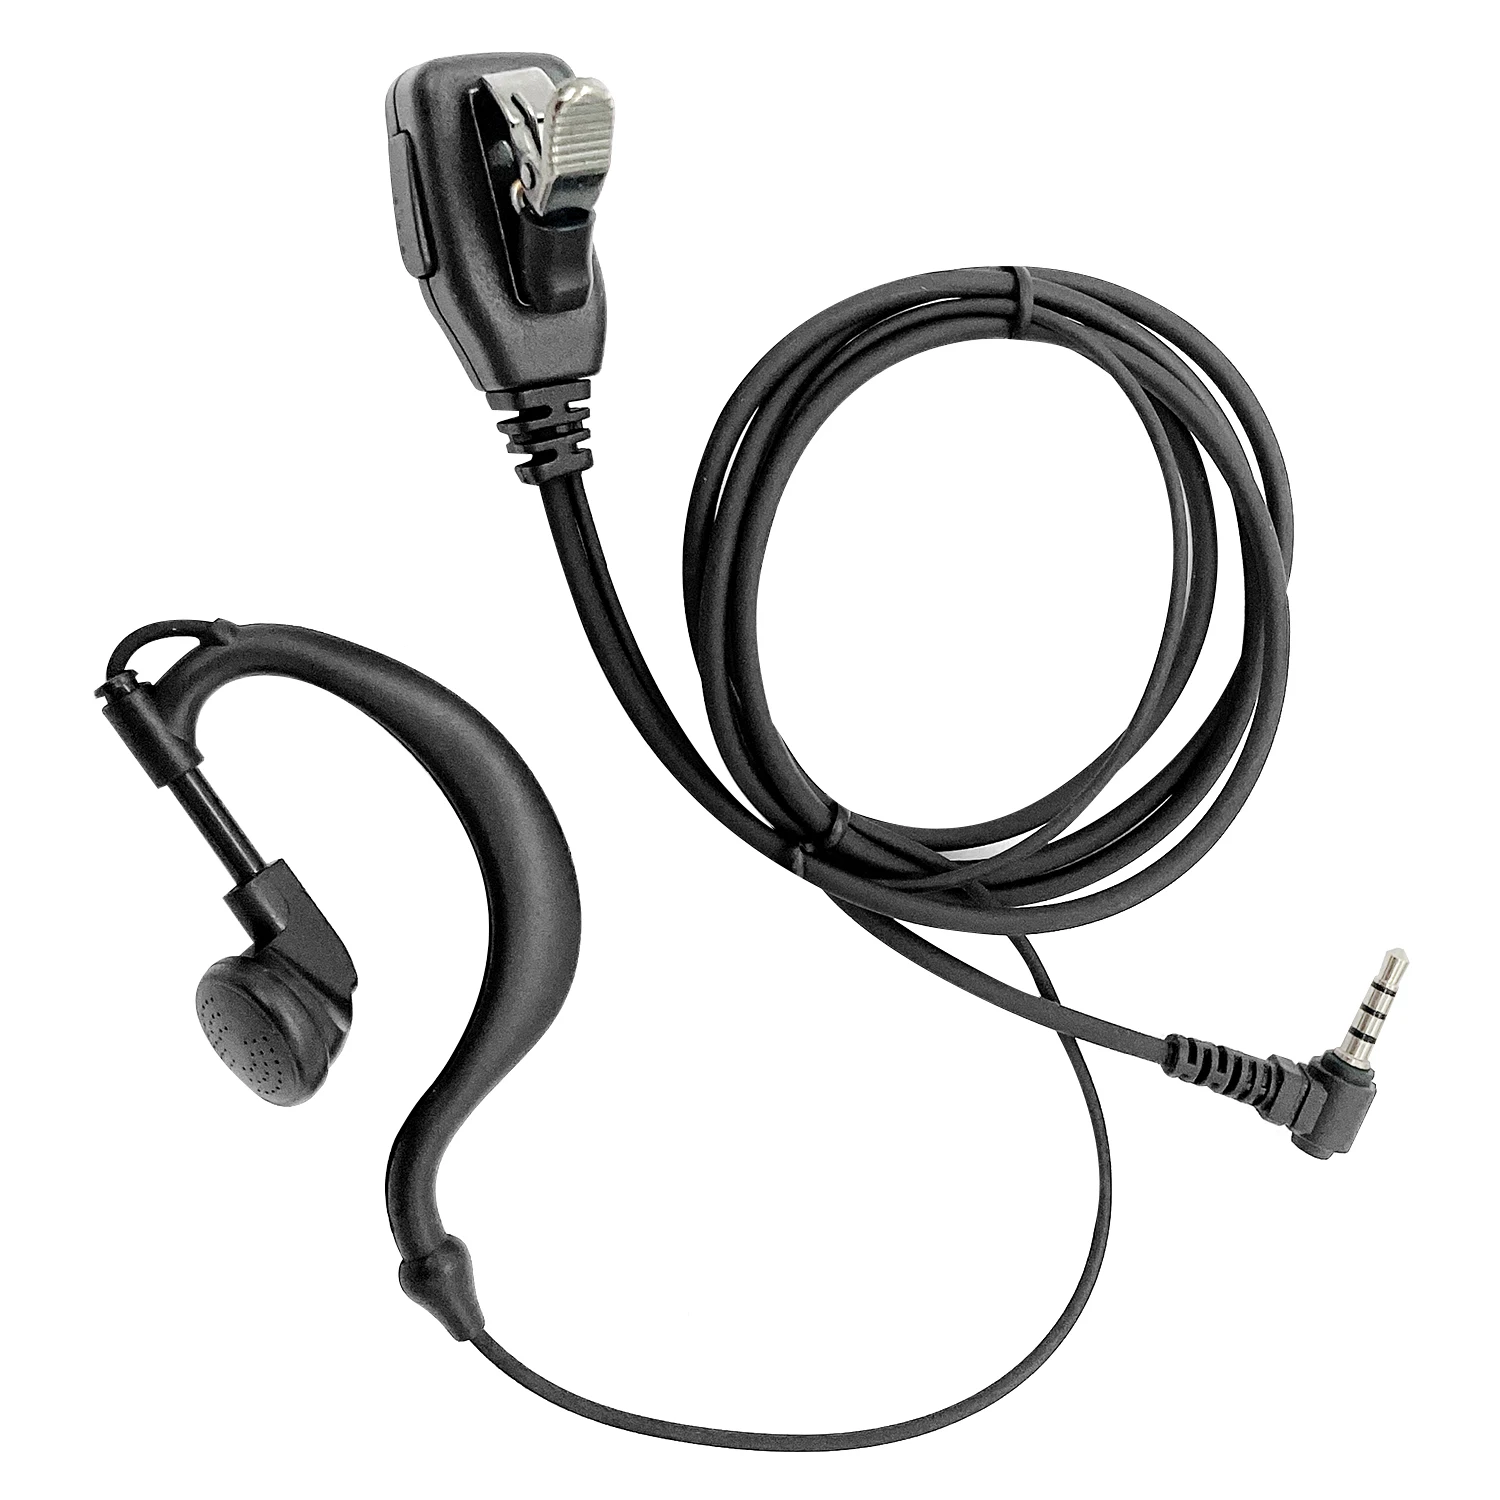 Type G headphones  walkie talkie Earpiece for YEASU  VX-1/1R,VX-2/2R,VX-3/3R,VX-5/5R two way radio